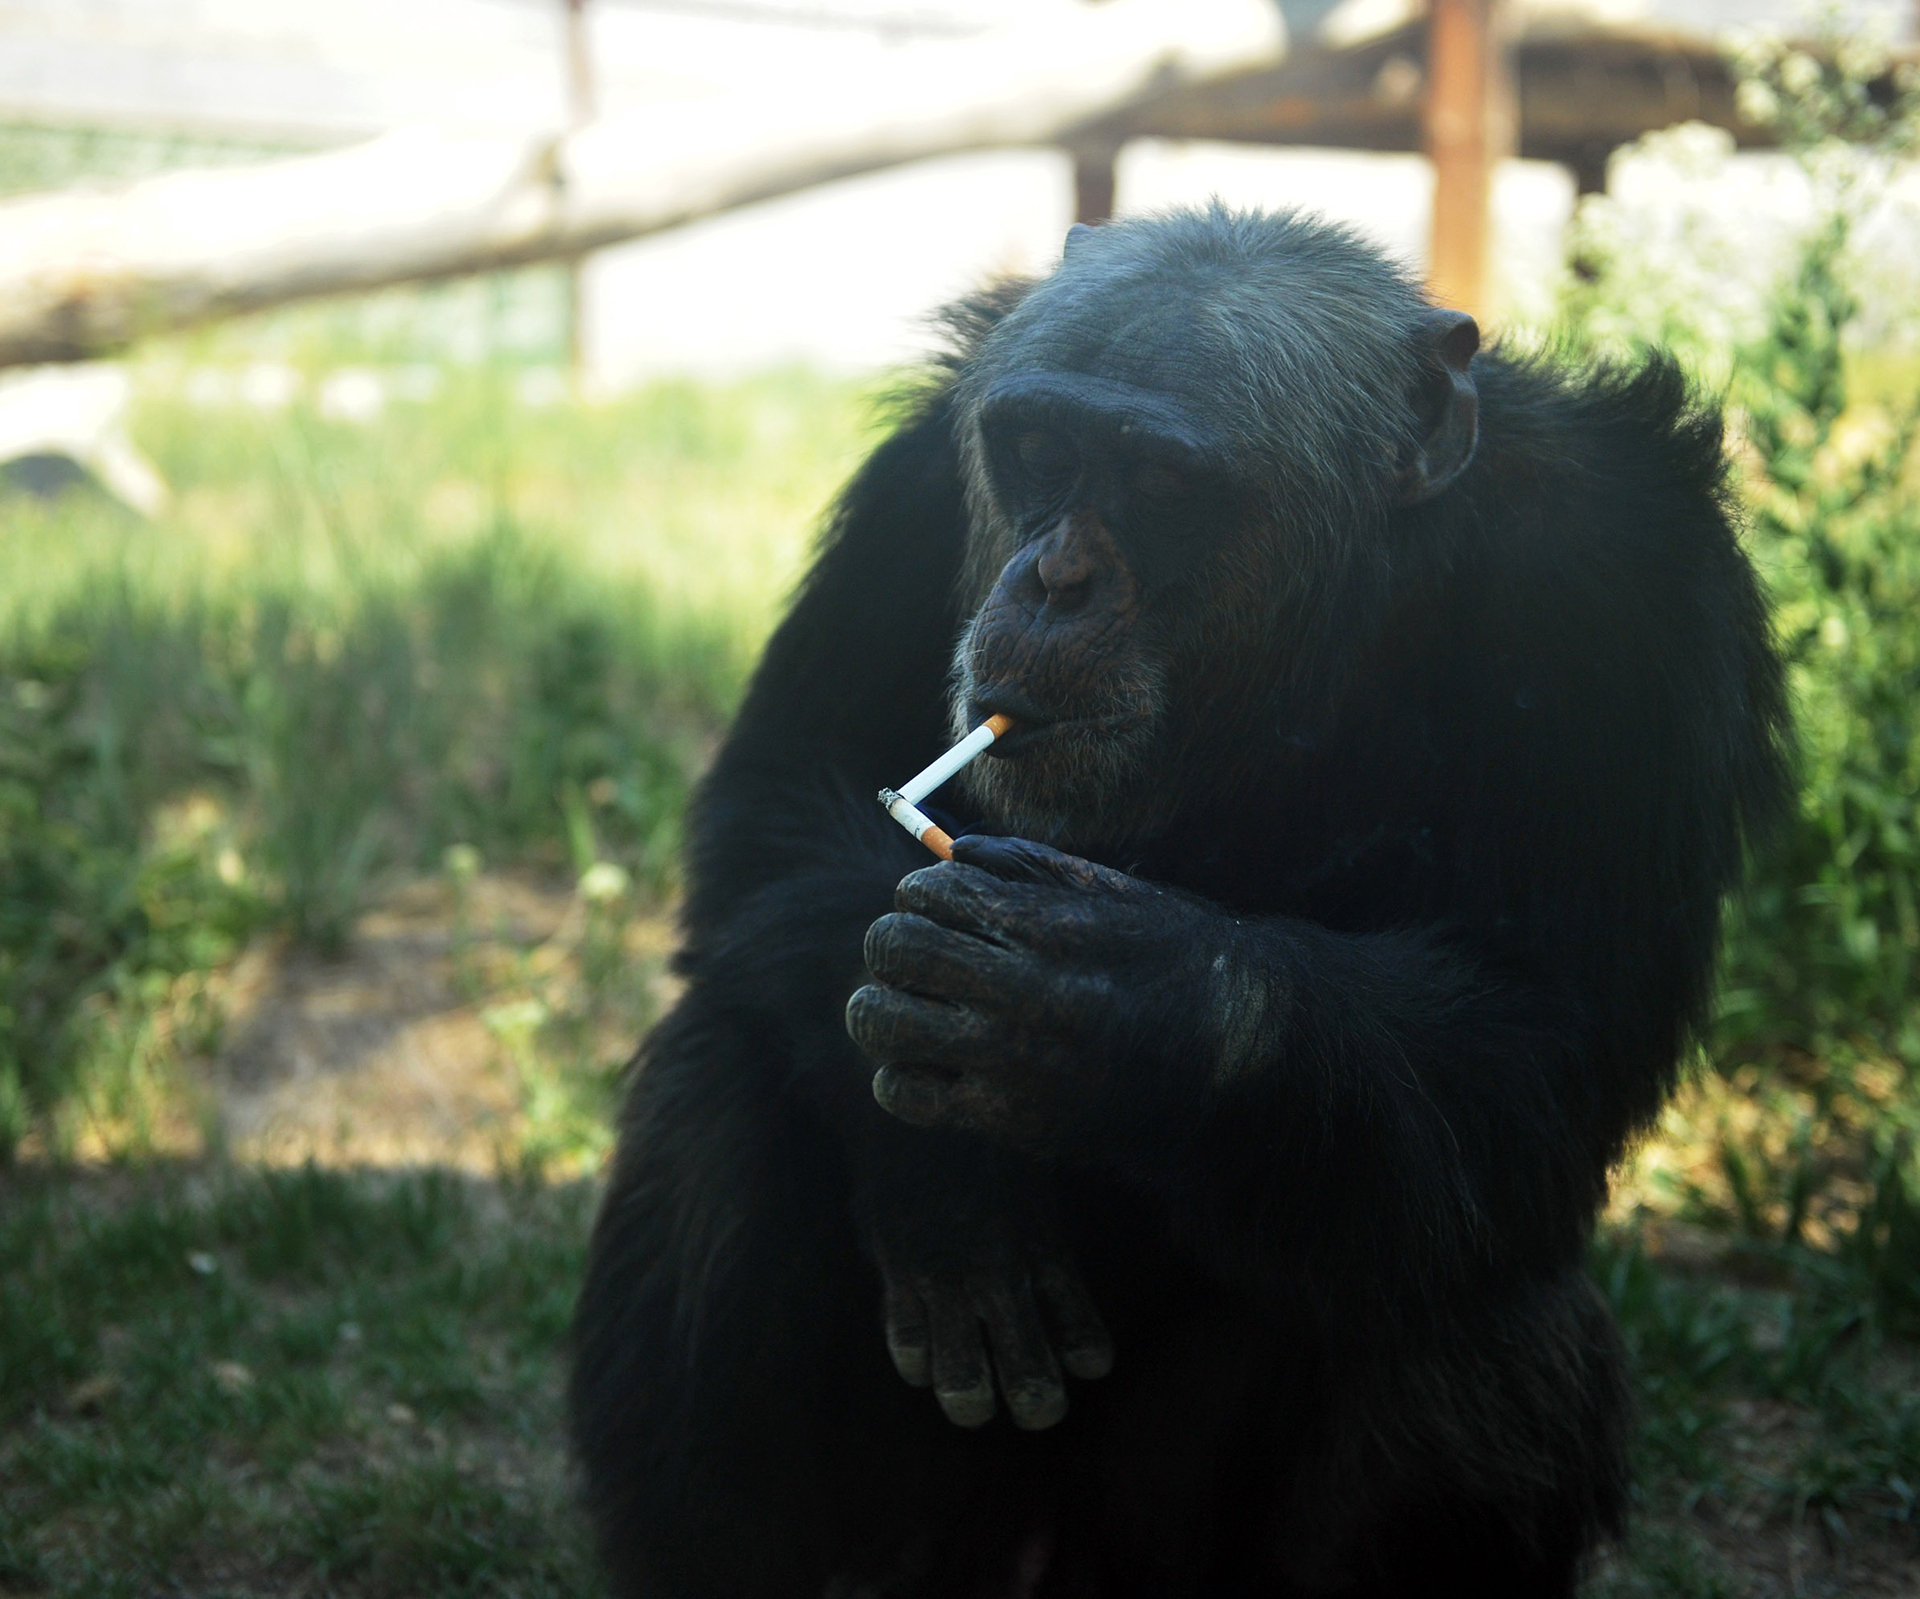 Animal rights activist sue zoo over ‘smoking chimpanzee’